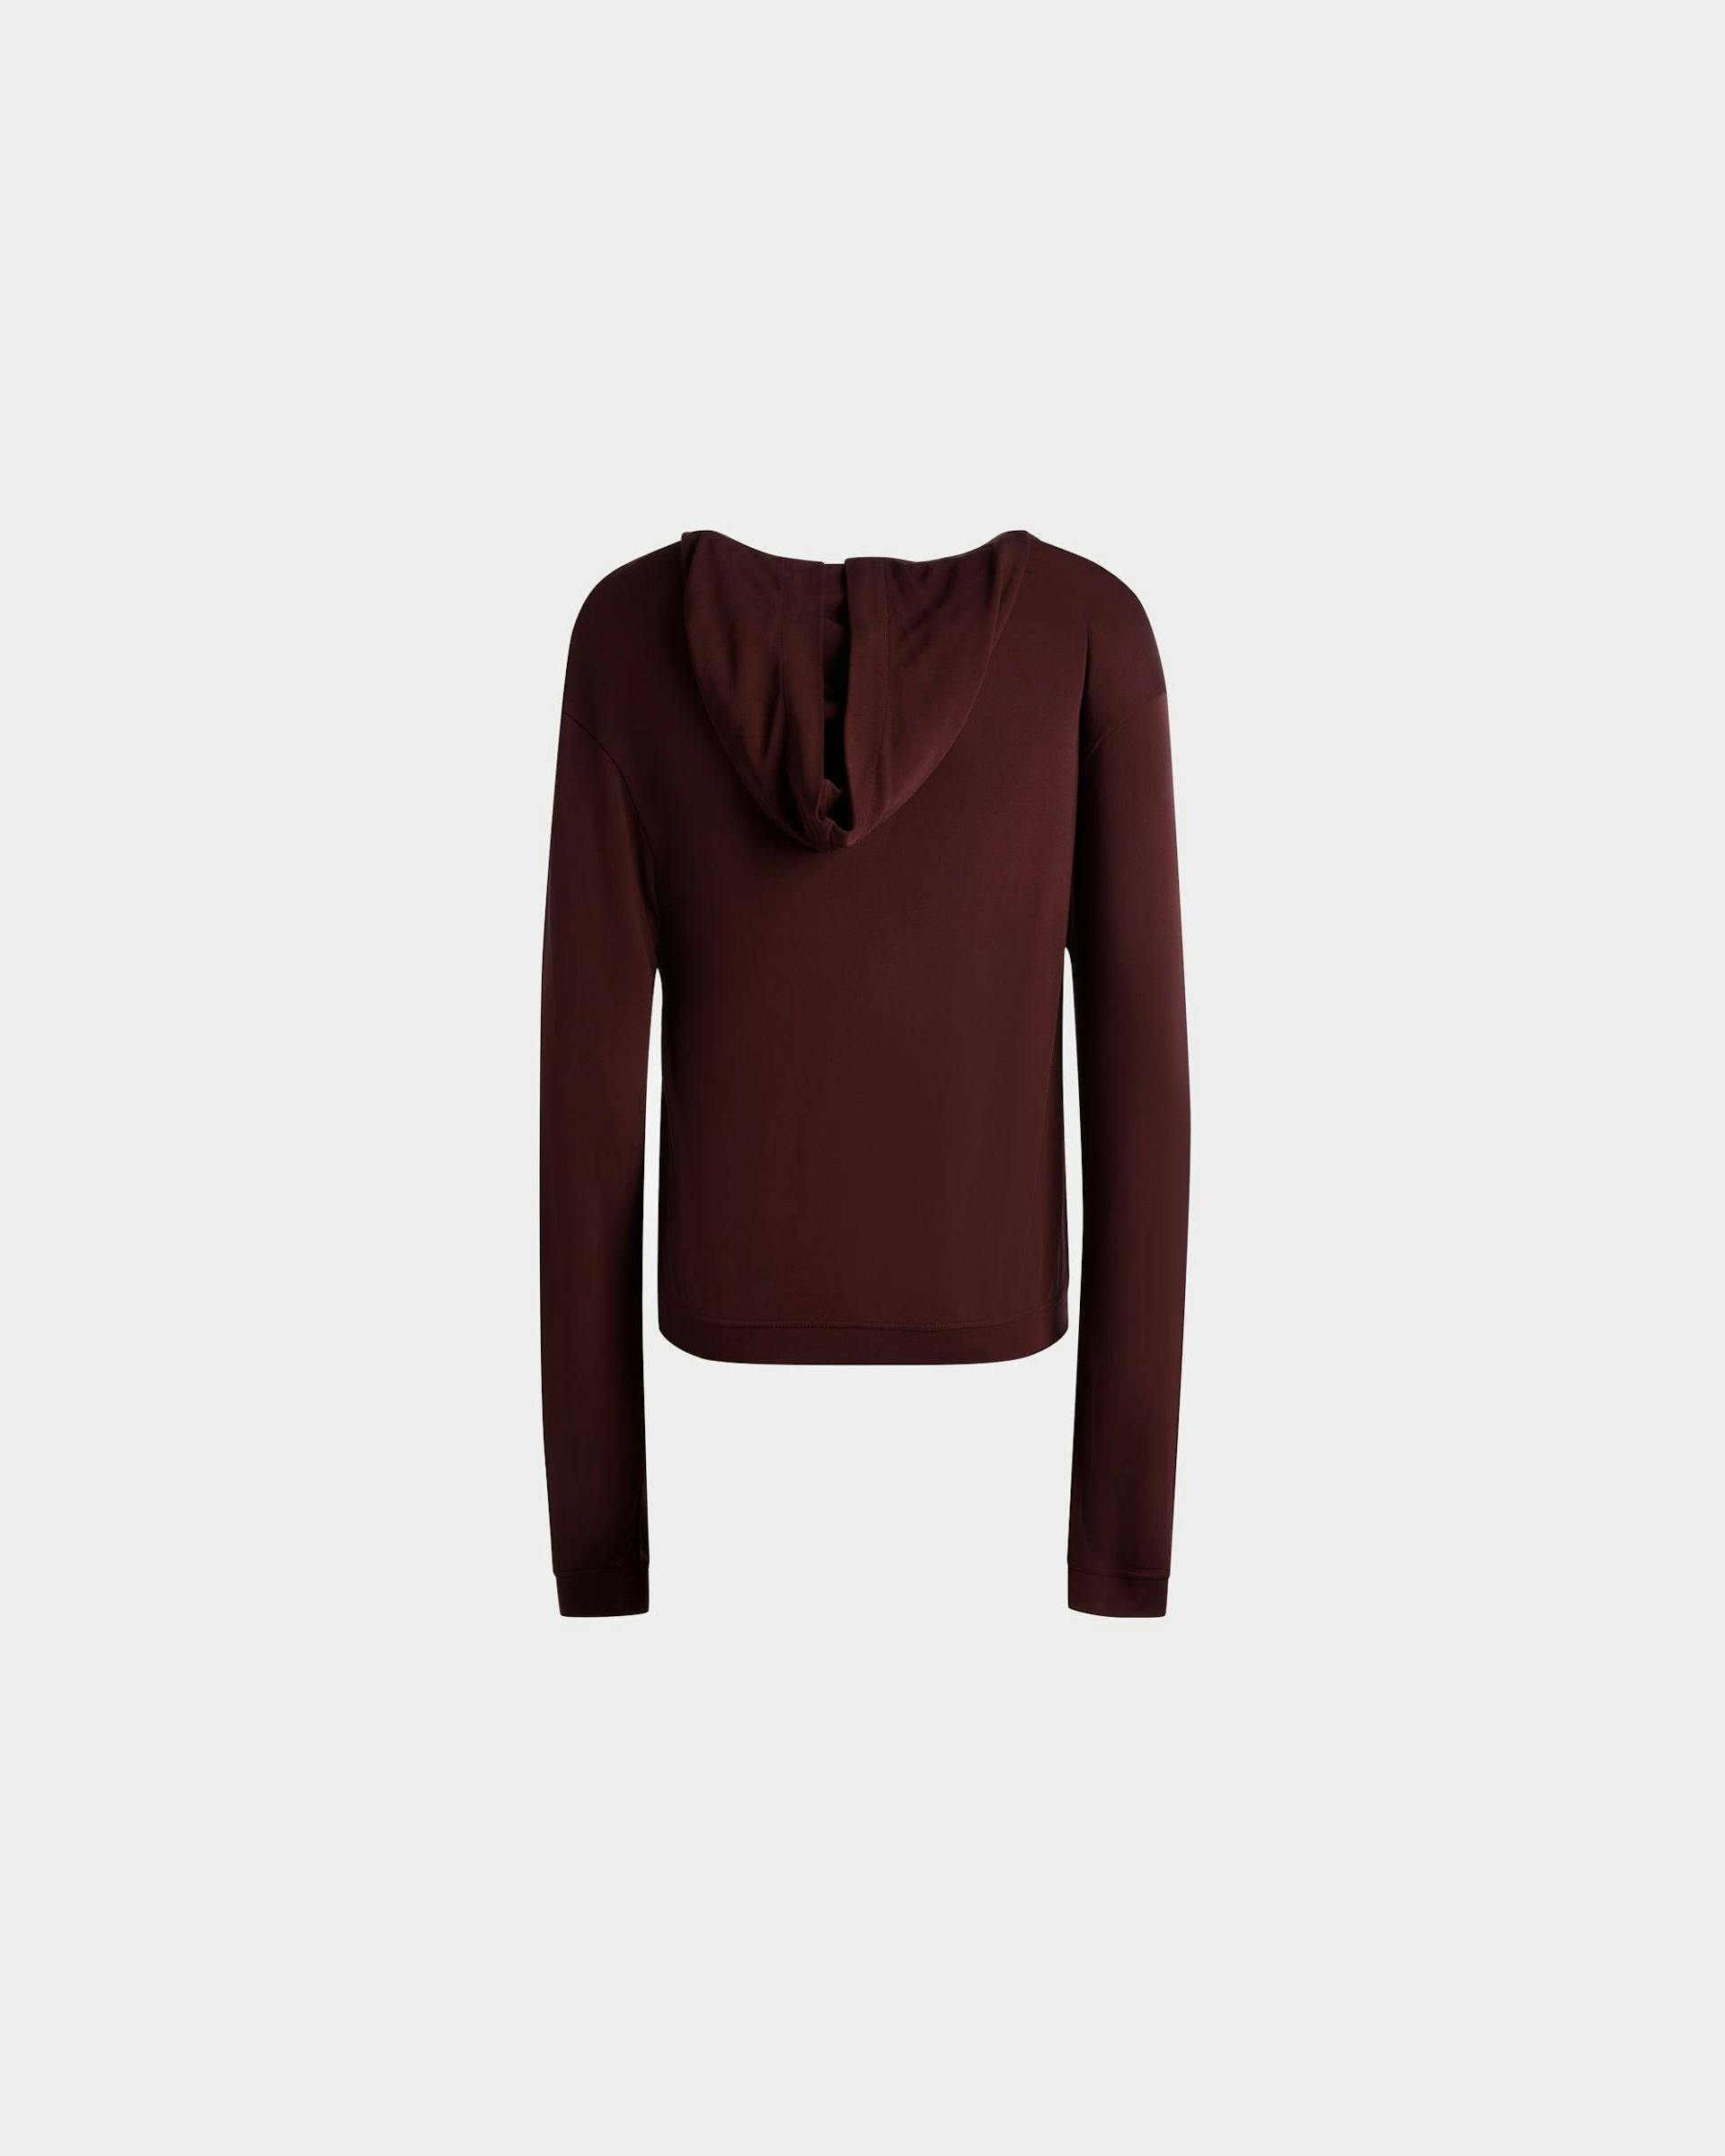 Women's Hooded Sweatshirt In Burgundy Fabric | Bally | Still Life Back